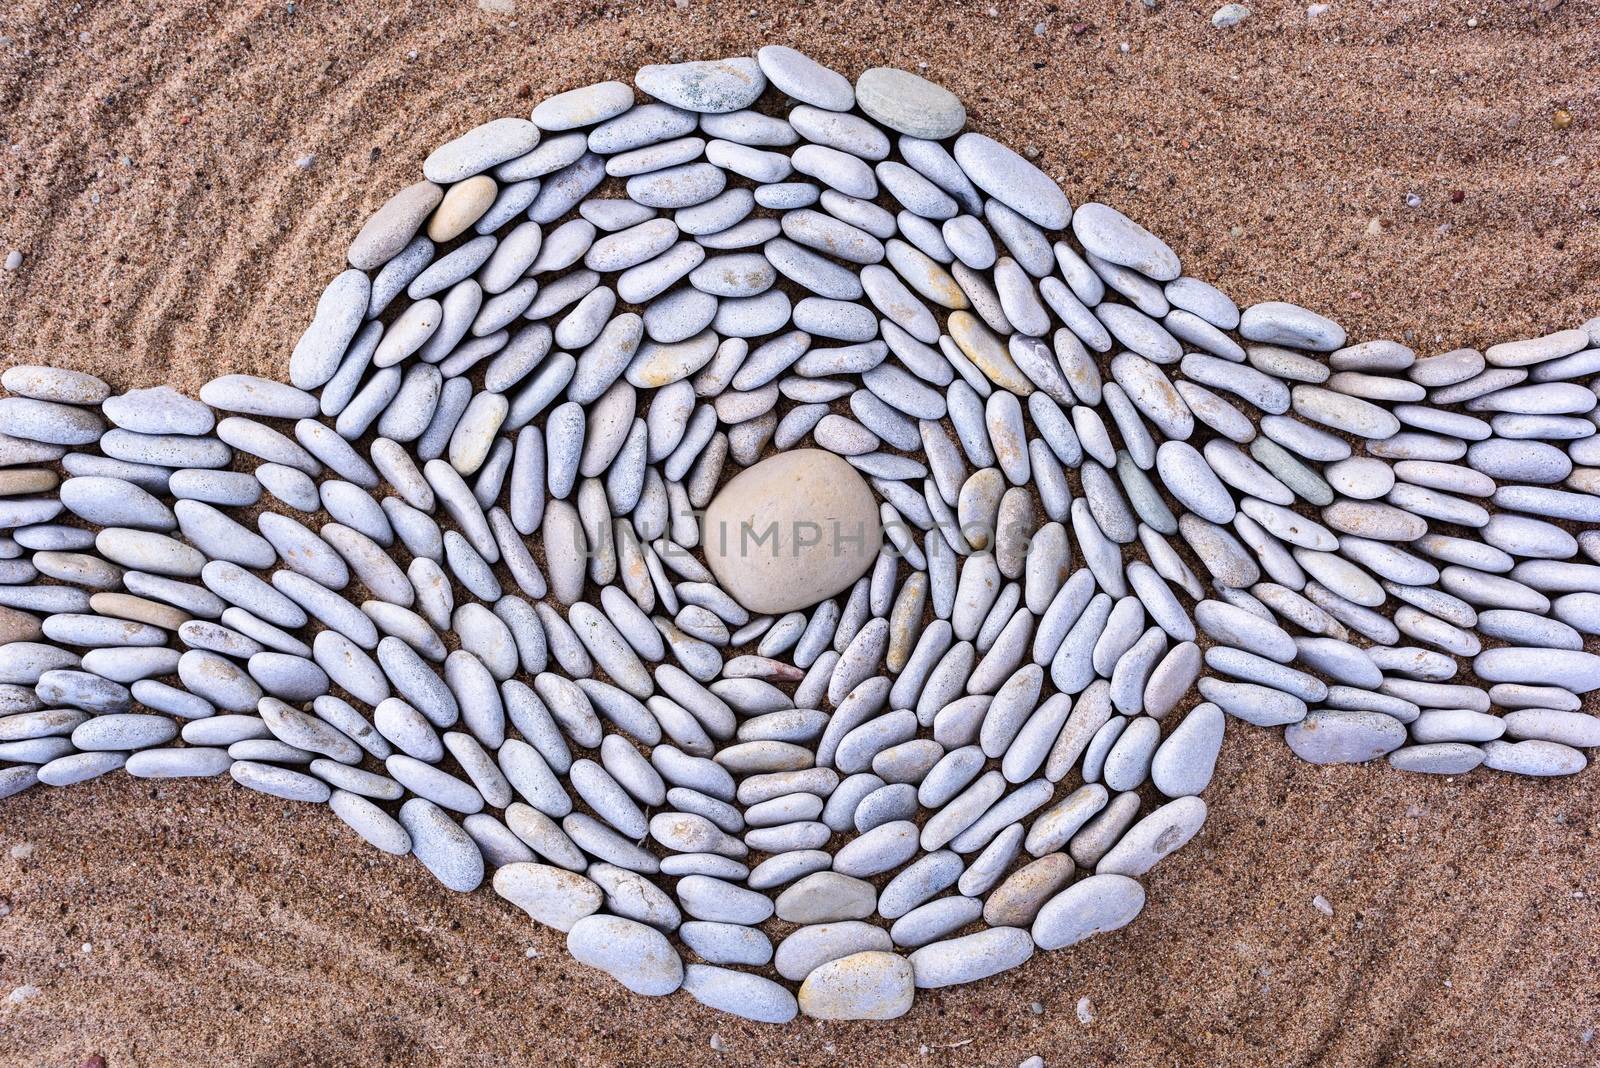 Twisting of stones on a sandy beach